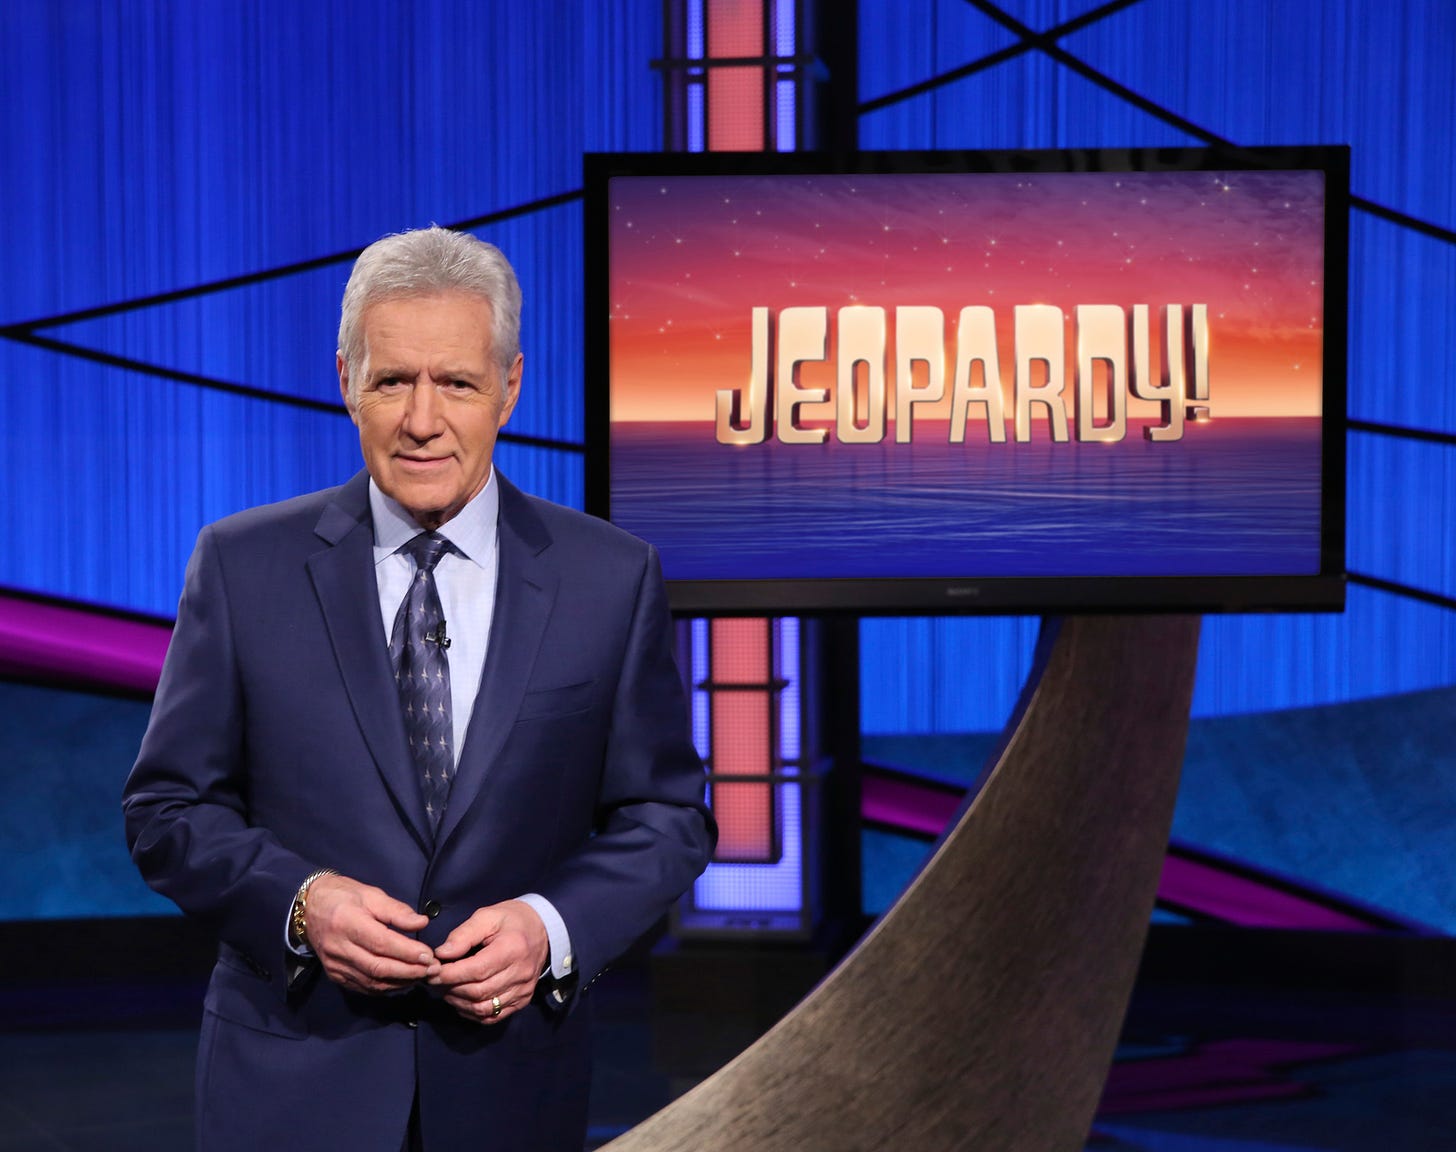 Jeopardy! host Alex Trebek looks better than ever as he returns in ...